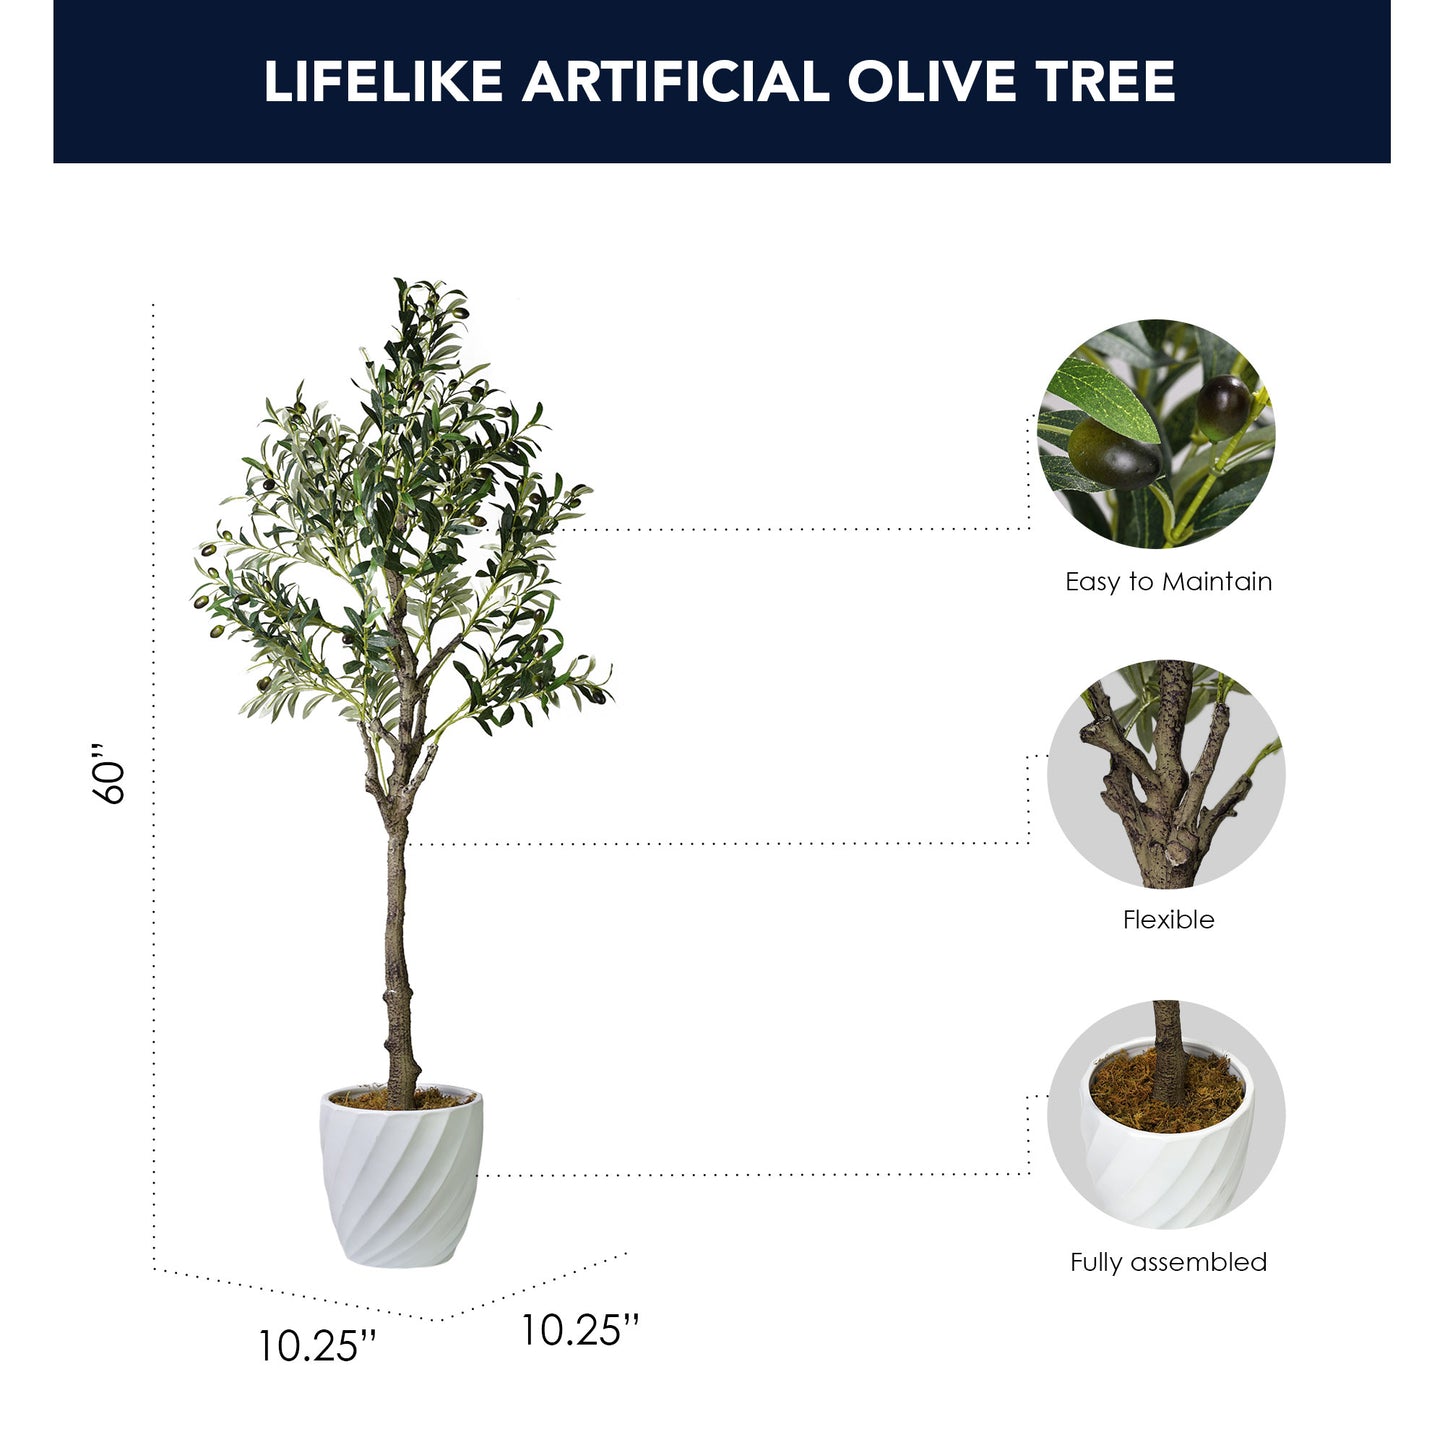 Artificial Olive Tree in White Ceramic Testured Pot - 60" - Botanica Home ™